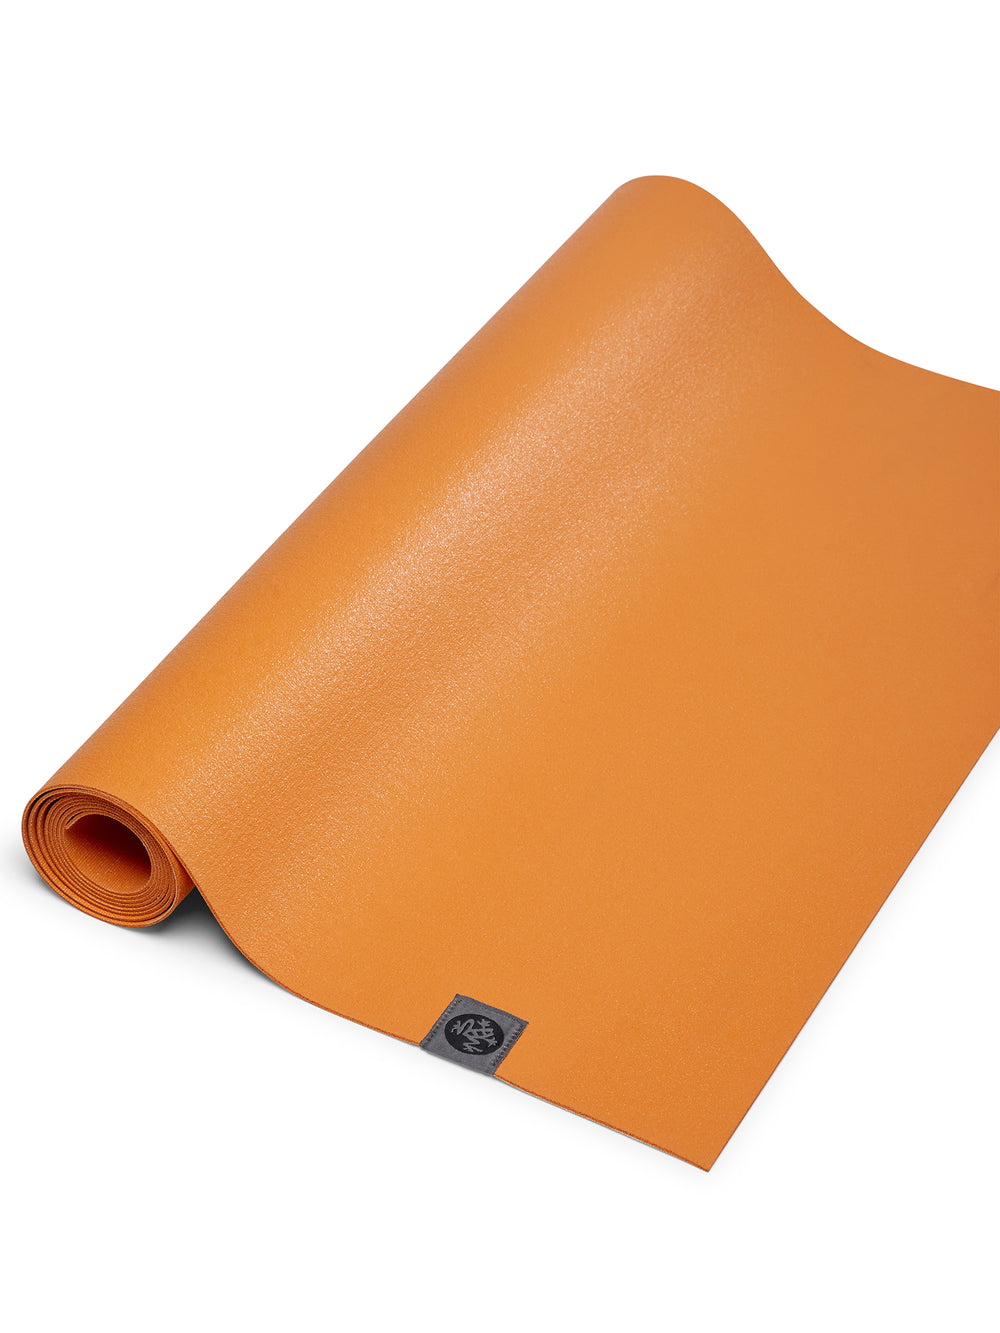 [Manduka] eko super lite Eco Super Light Travel Yoga Mat (1.5mm) Folding / eKO Super Lite Travel Yoga Mat Manduka Lightweight 23SS [A] 80_1